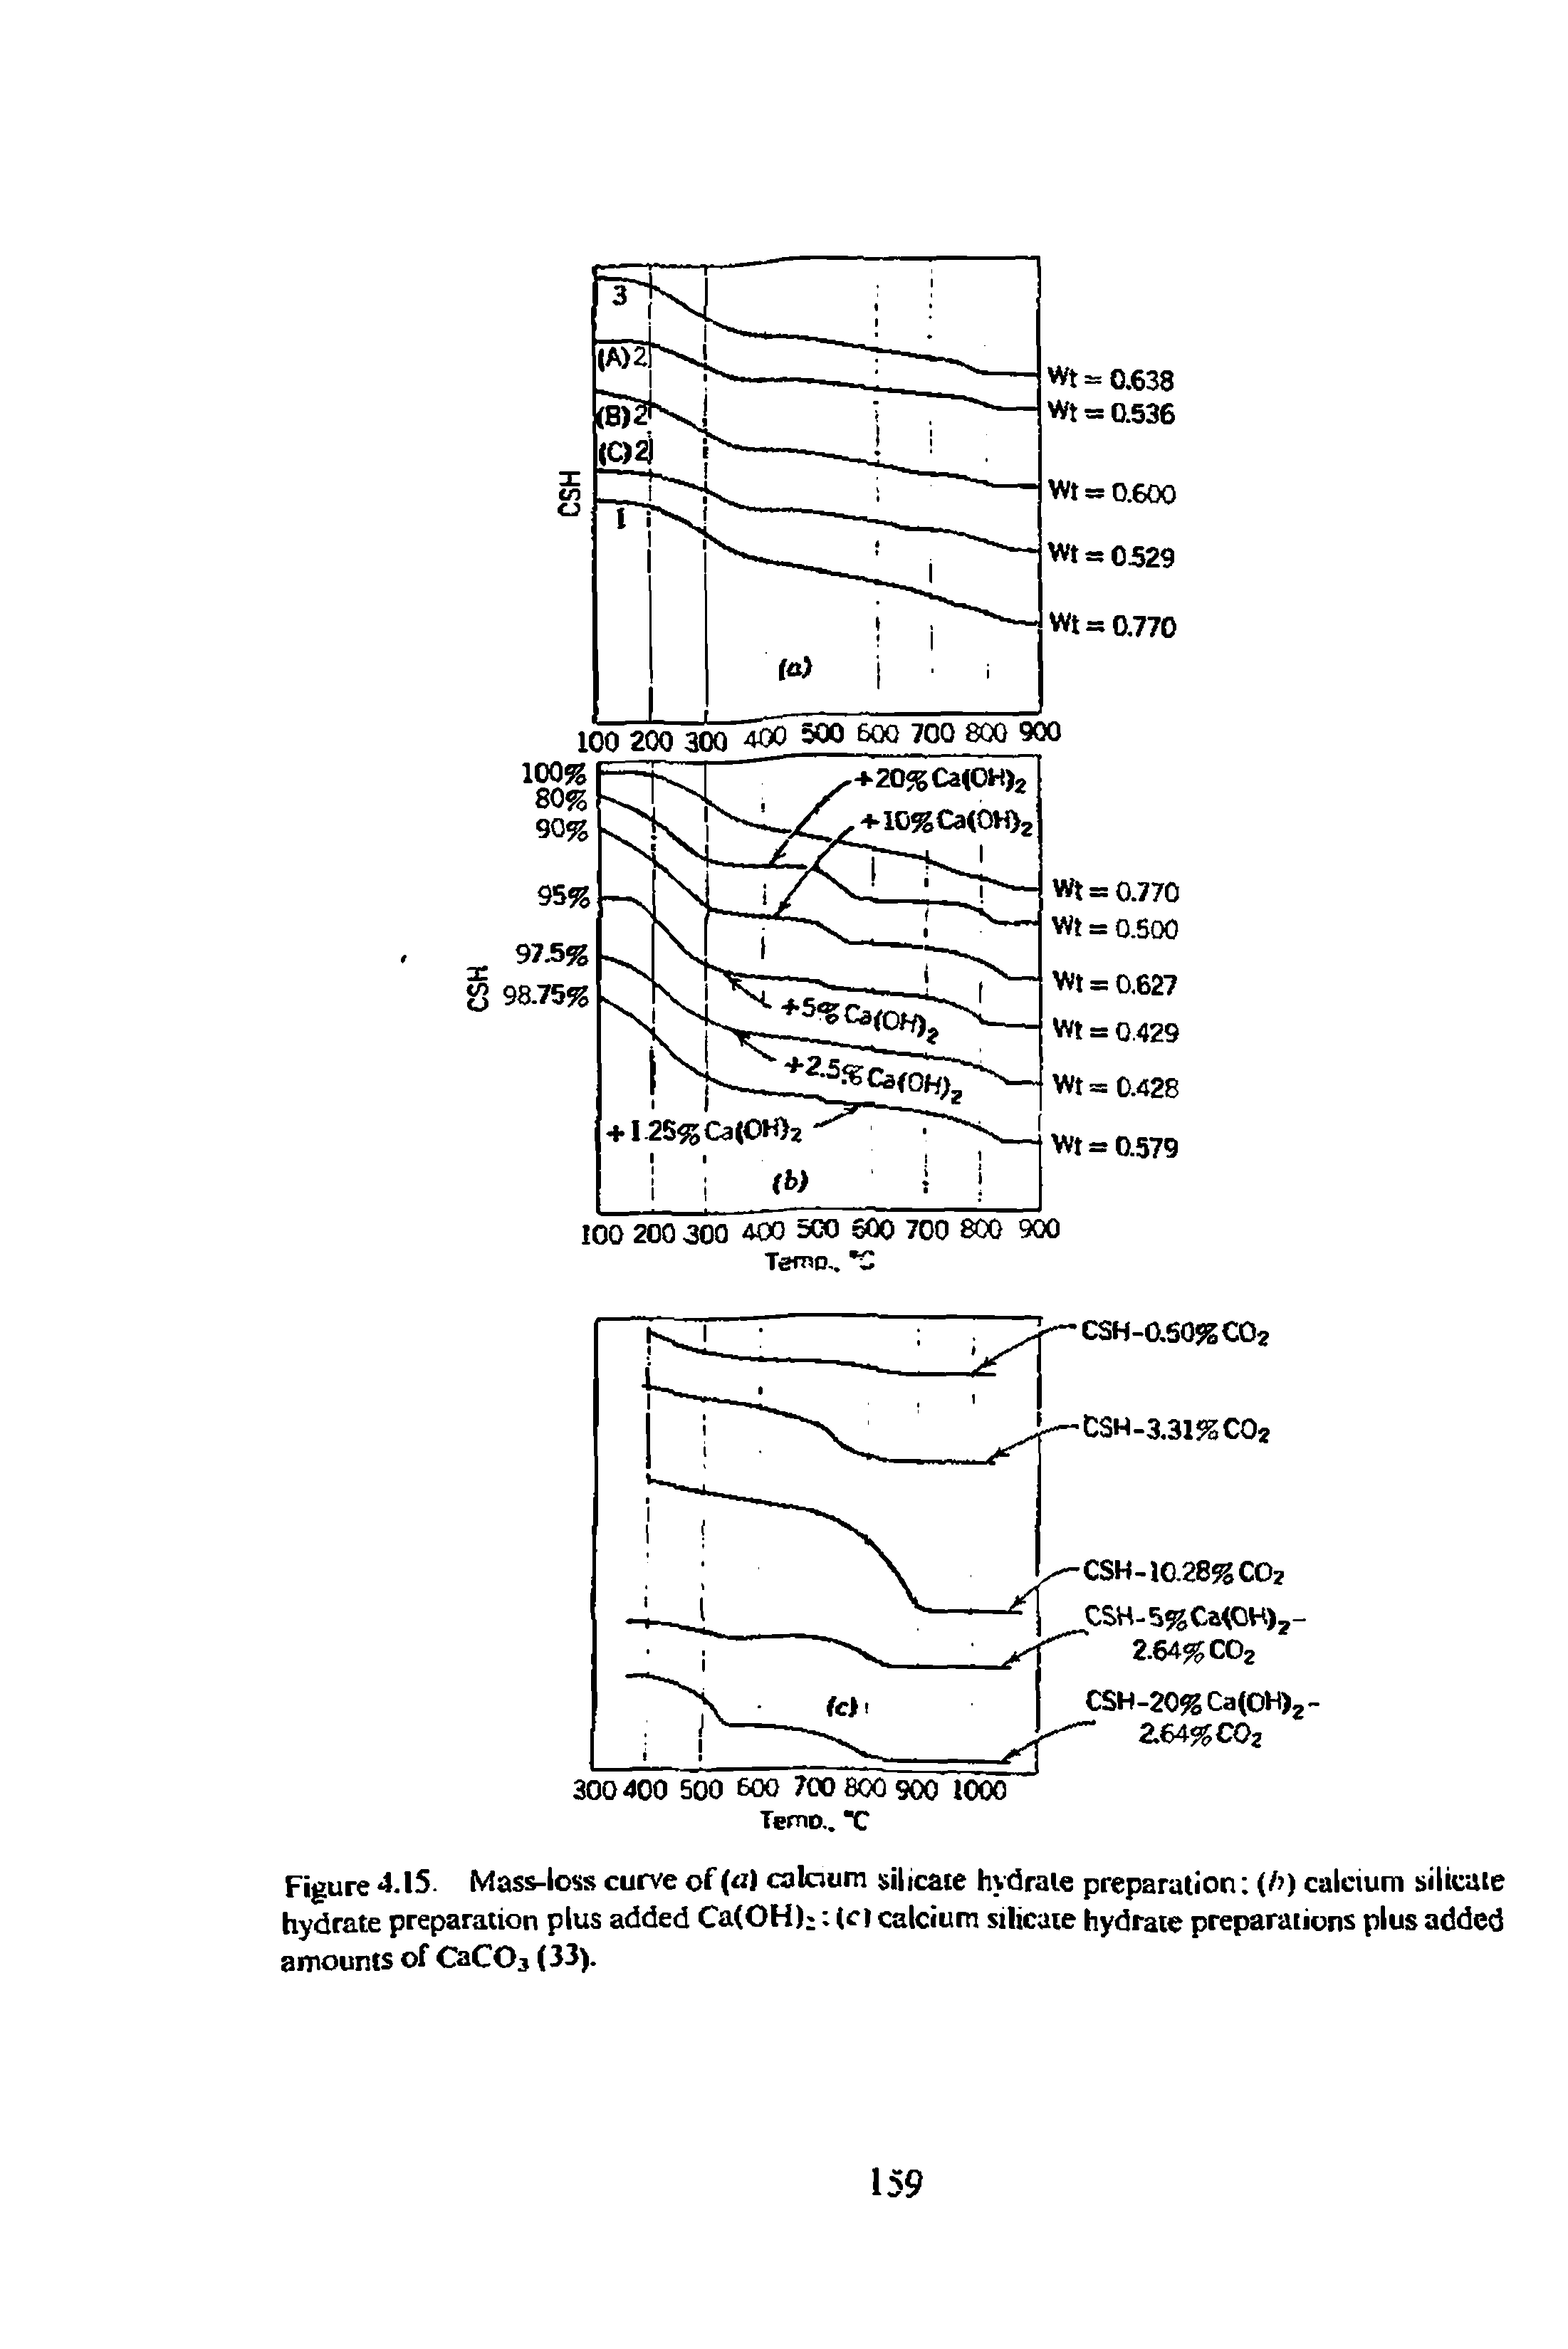 Figure 4.15. Mass-loss curve of ( ) calcium silicate hydrale preparation (/ ) calcium silicate hydrate preparation plus added Ca(OH) (c calcium silicate hydrate preparations plus added amounts of CaC03 (33).